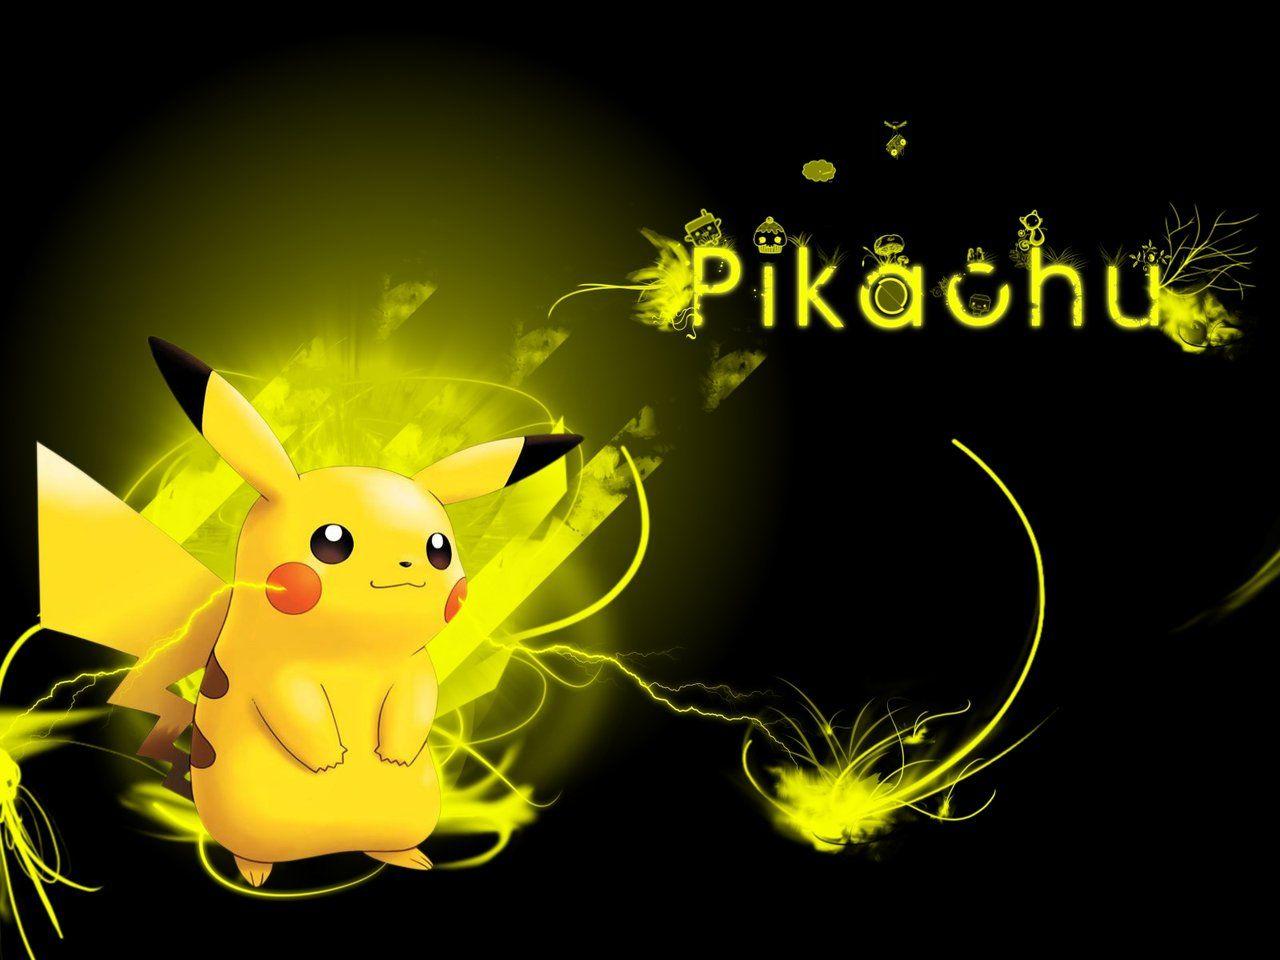 pikachu hd pikachuhd  Pikachu Pikachu wallpaper iphone Pikachu art